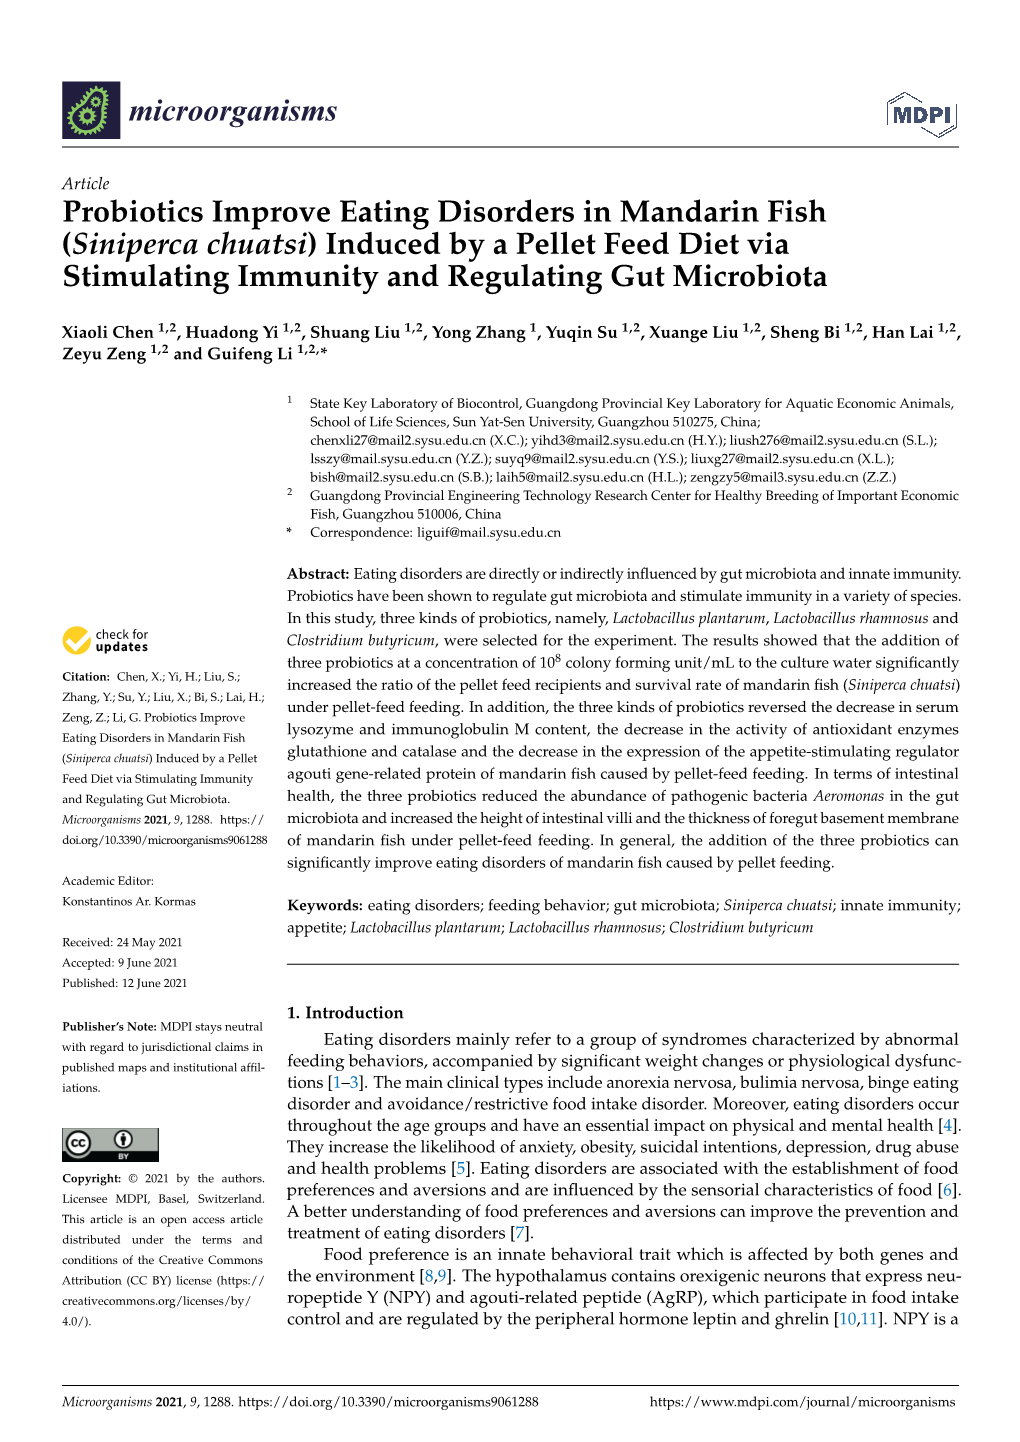 Probiotics Improve Eating Disorders in Mandarin Fish (Siniperca Chuatsi) Induced by a Pellet Feed Diet Via Stimulating Immunity and Regulating Gut Microbiota